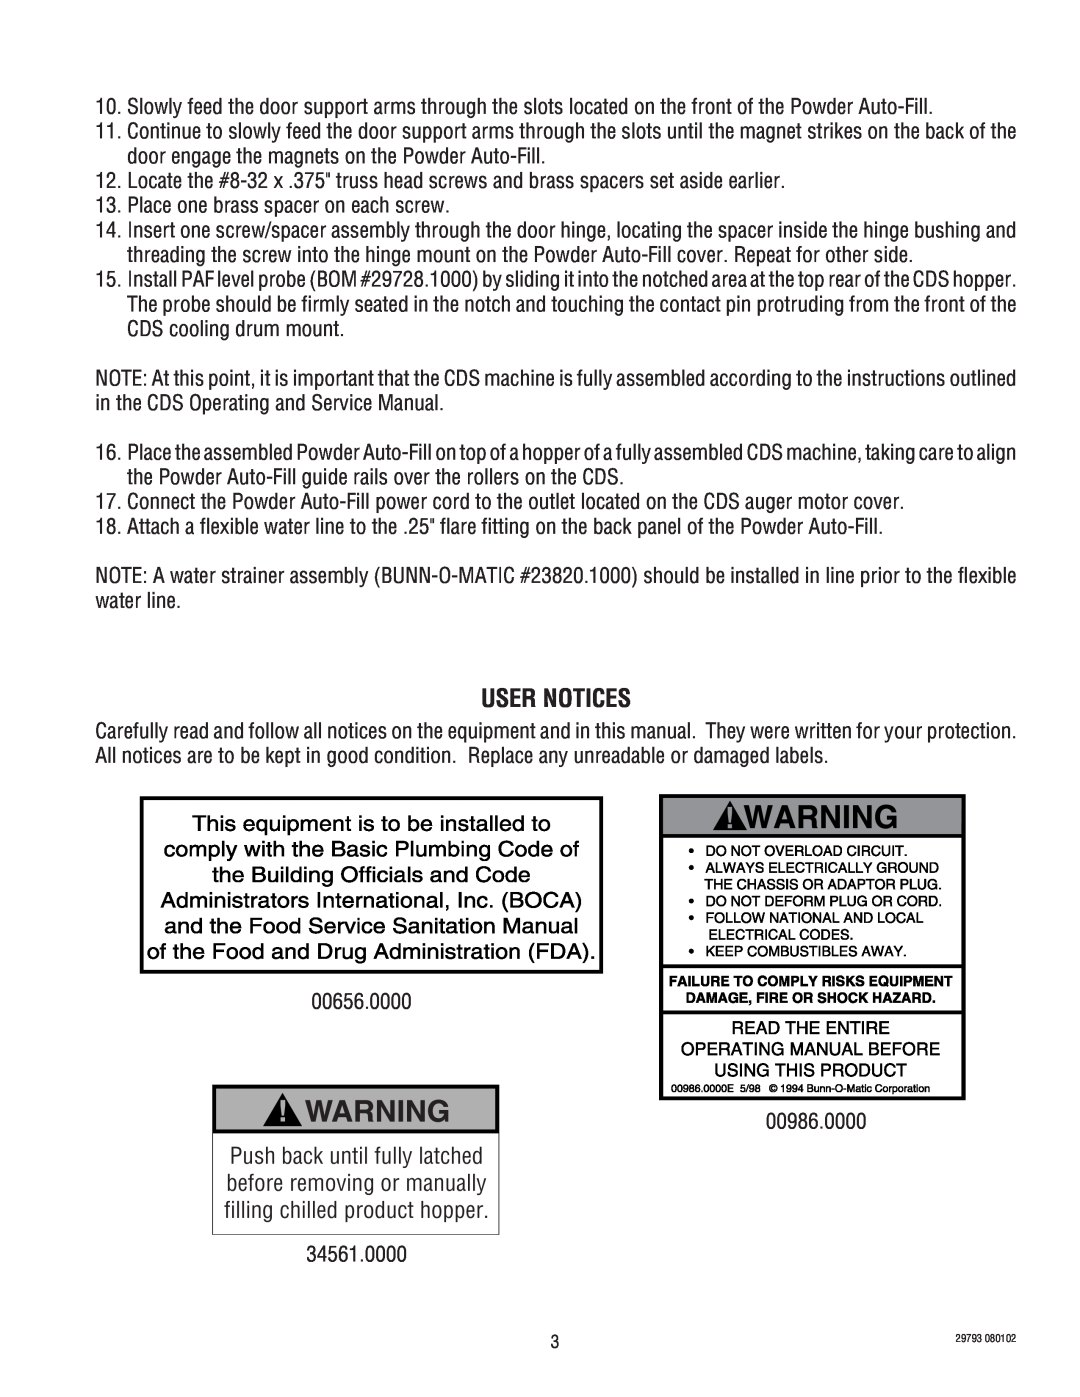 Bunn CDS-2, CDS-3 service manual User Notices 